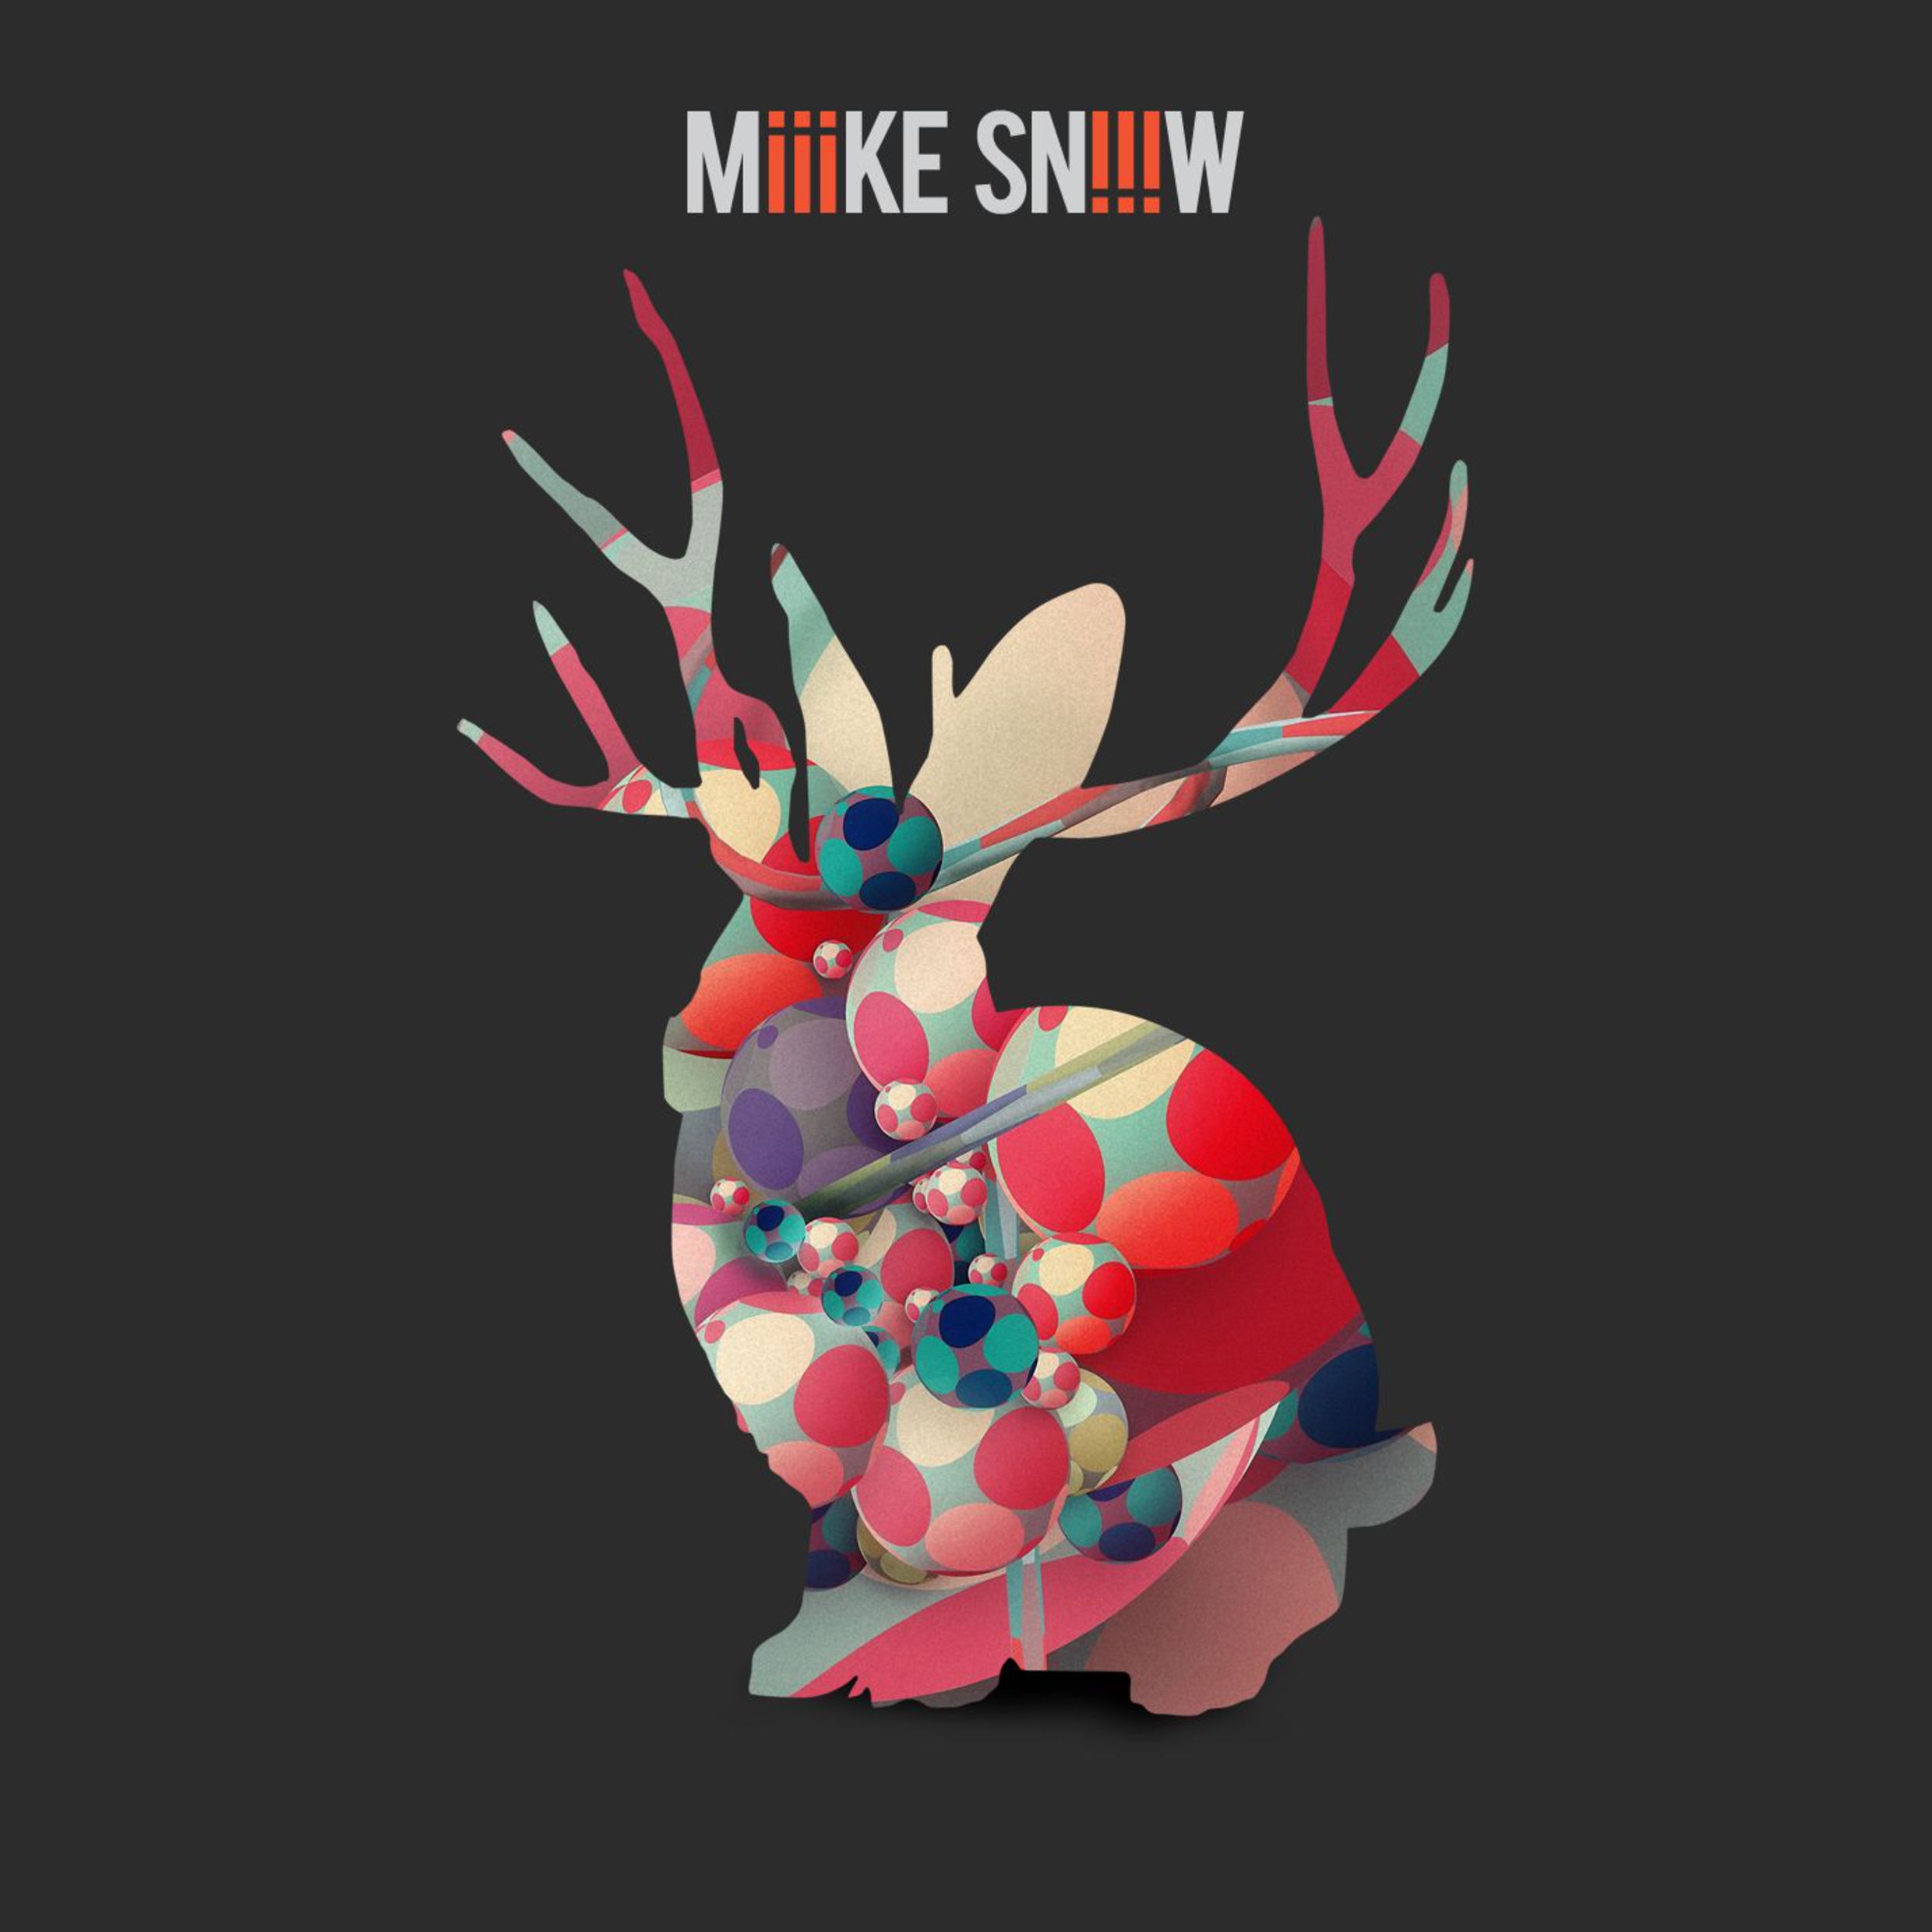 miike-snow-iii-2016-2480x2480.jpg